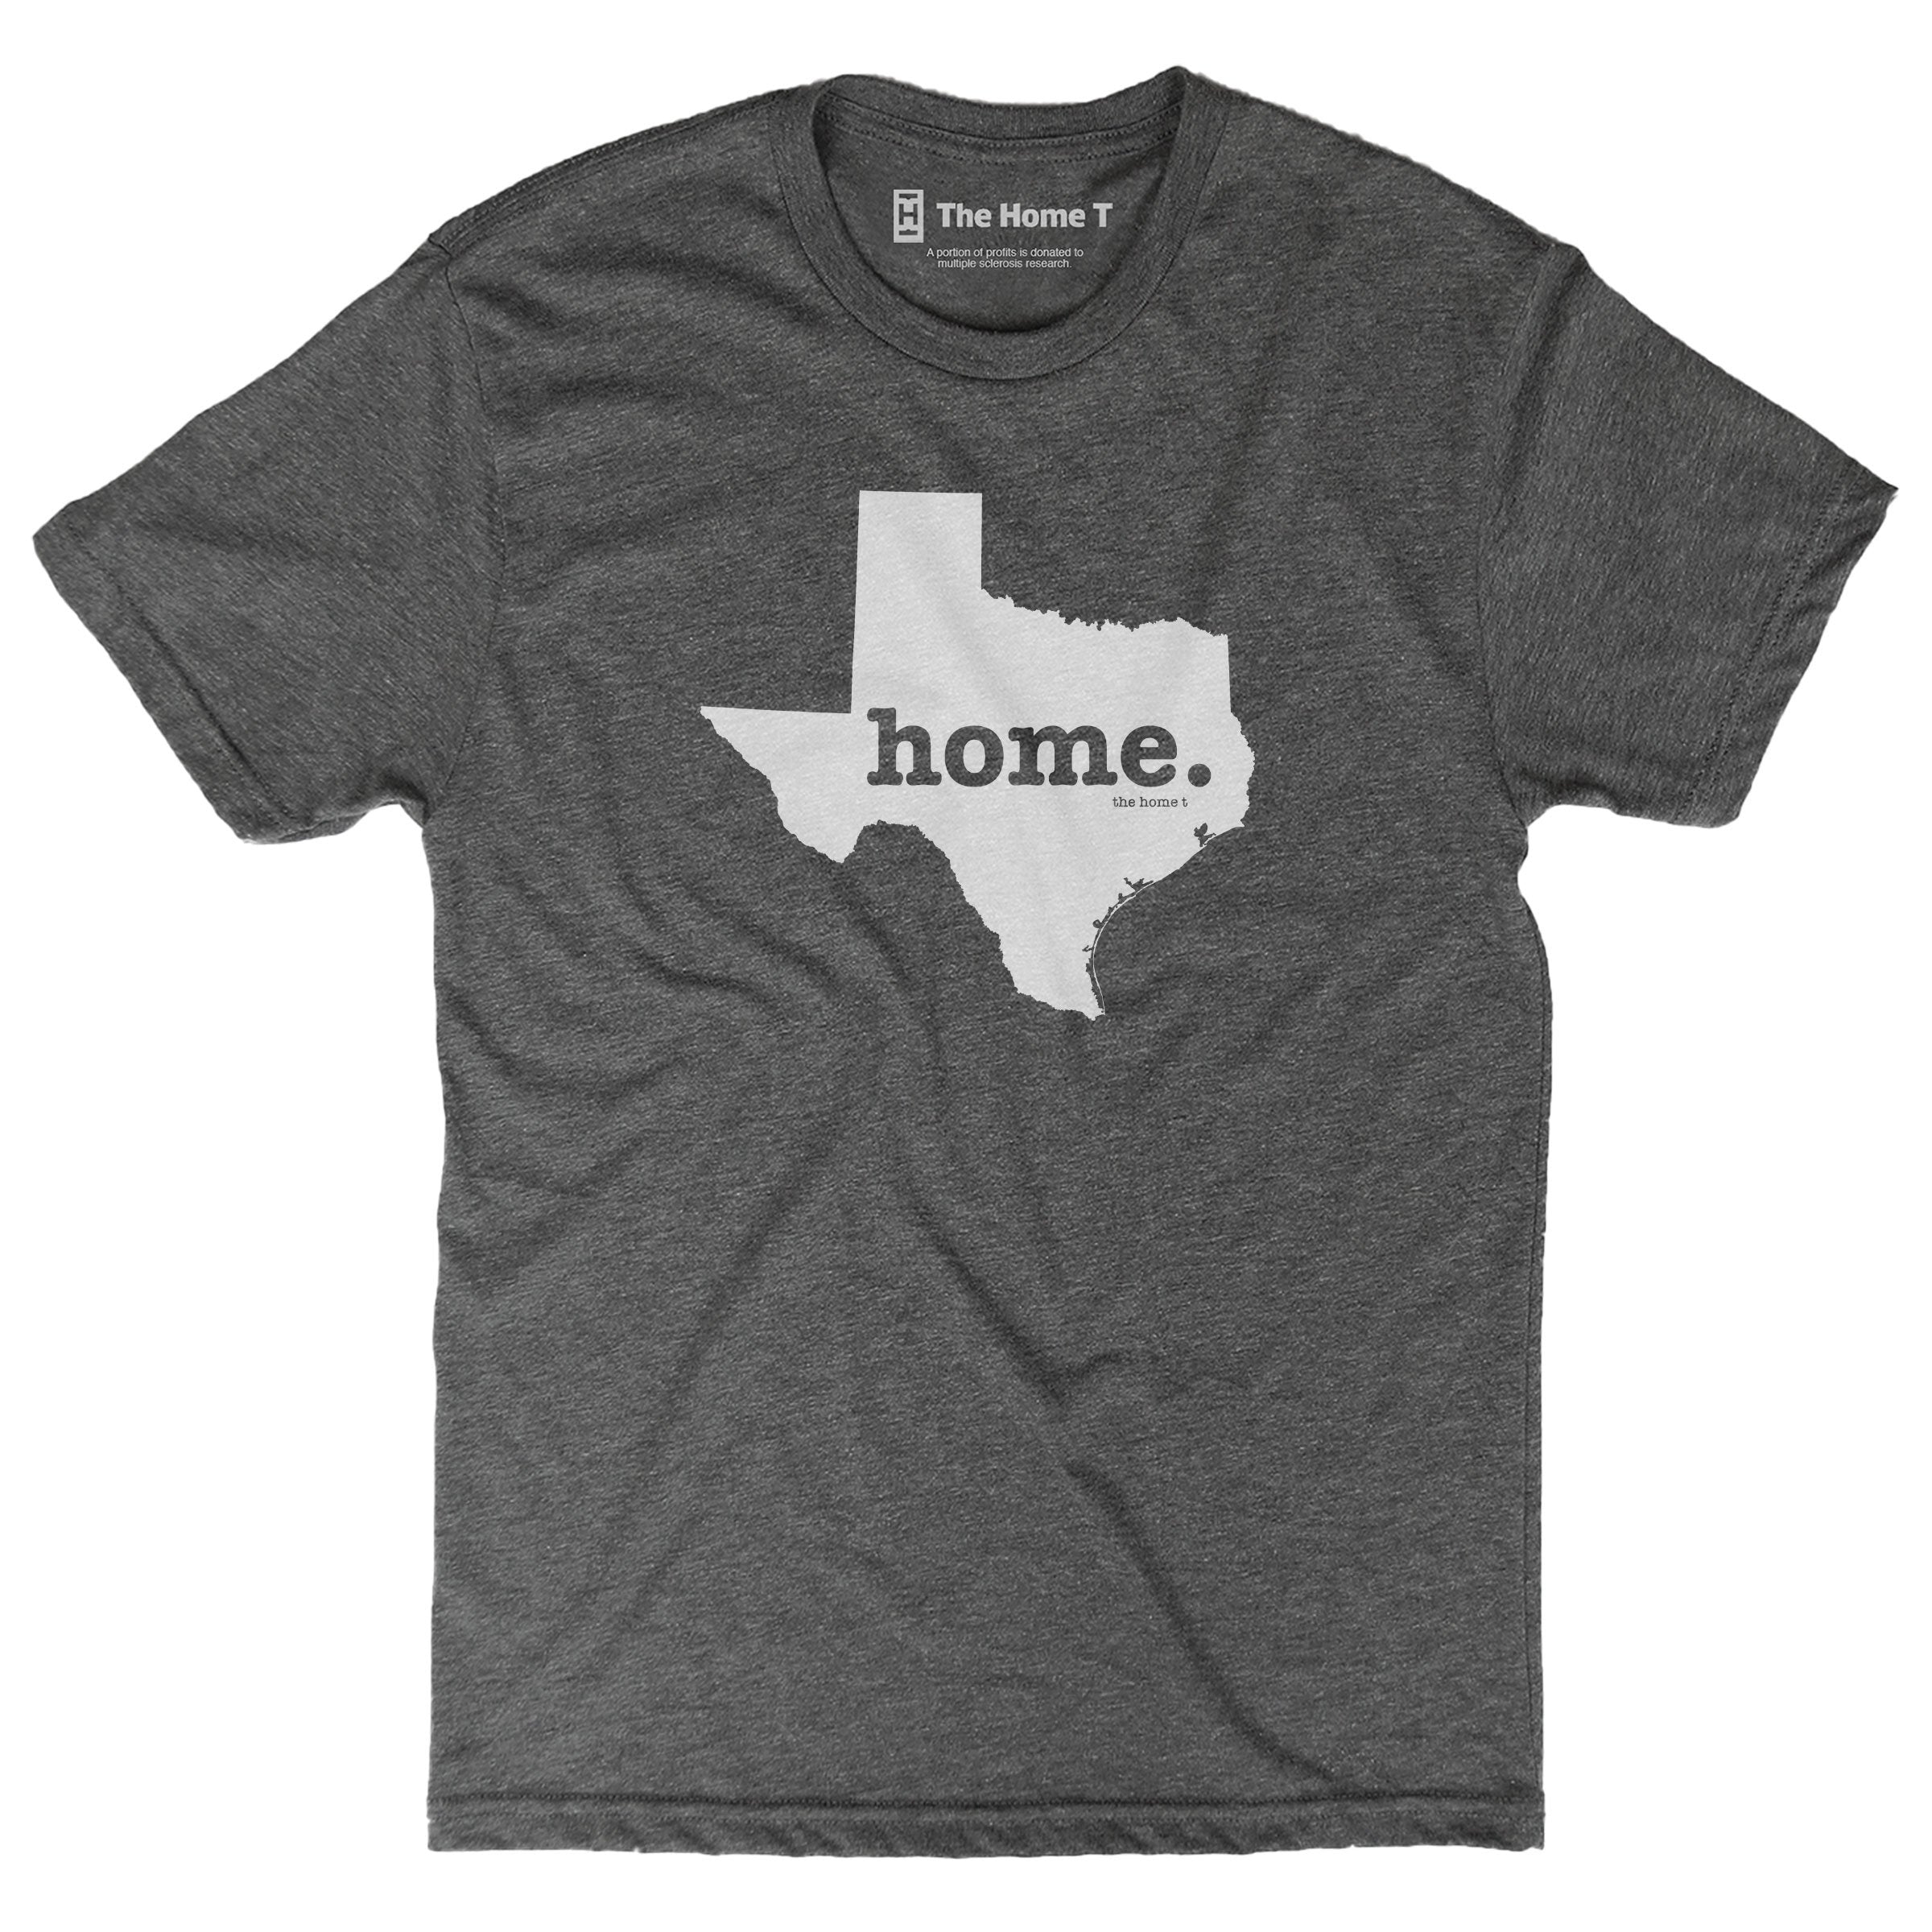 Texas Home T-shirt Original Crew The Home T XS Dark Grey